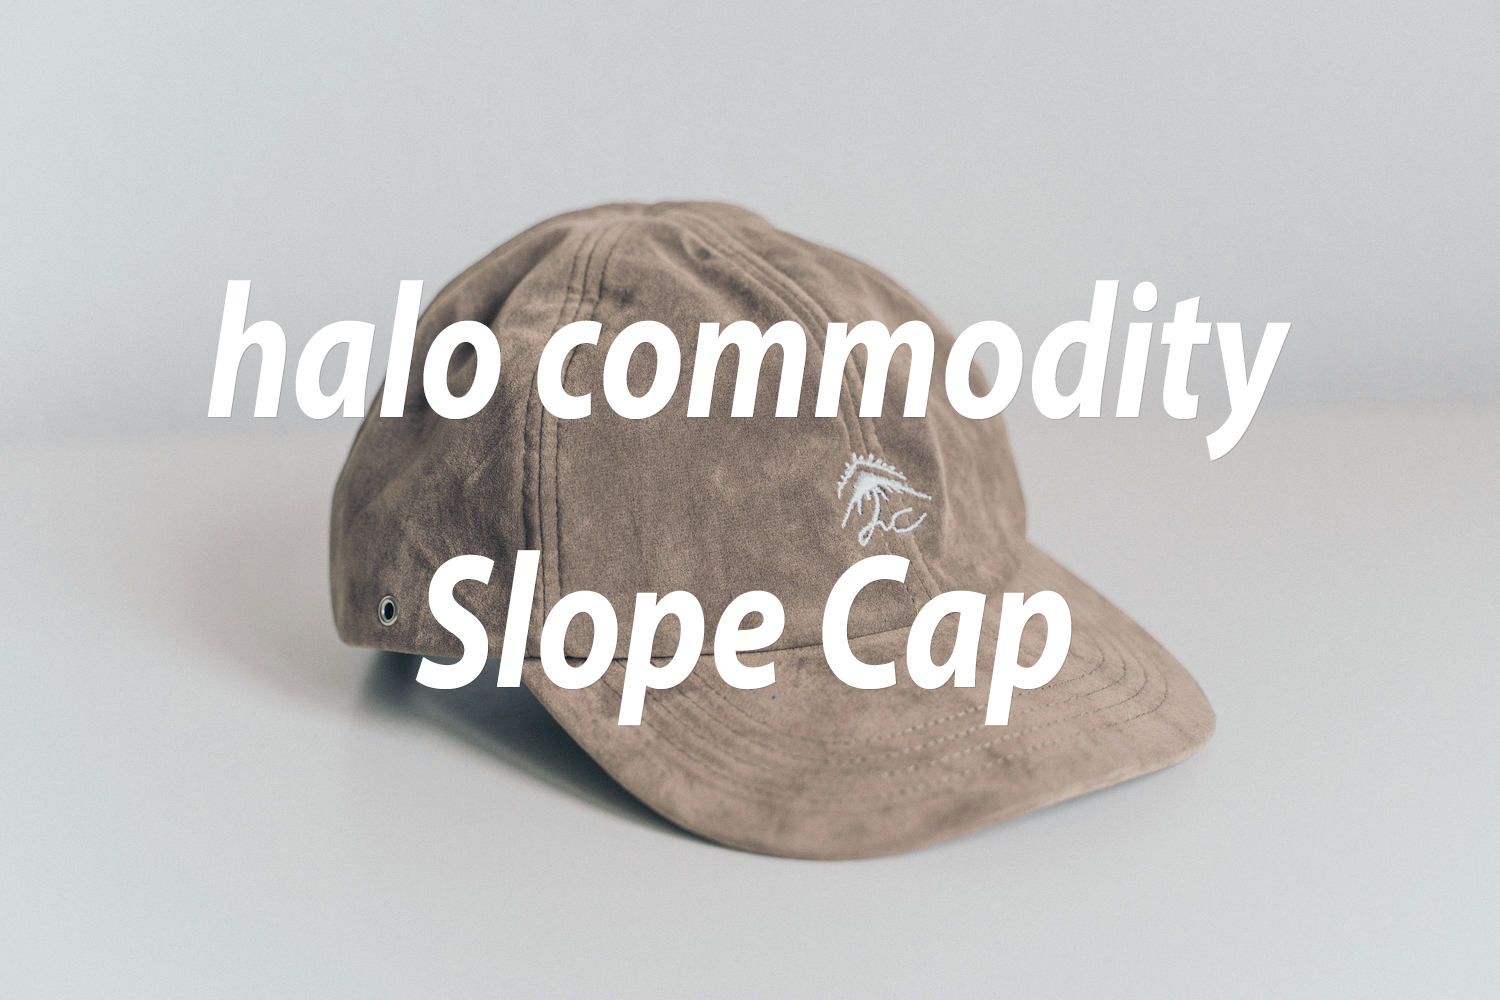 halo commodity Slope Cap